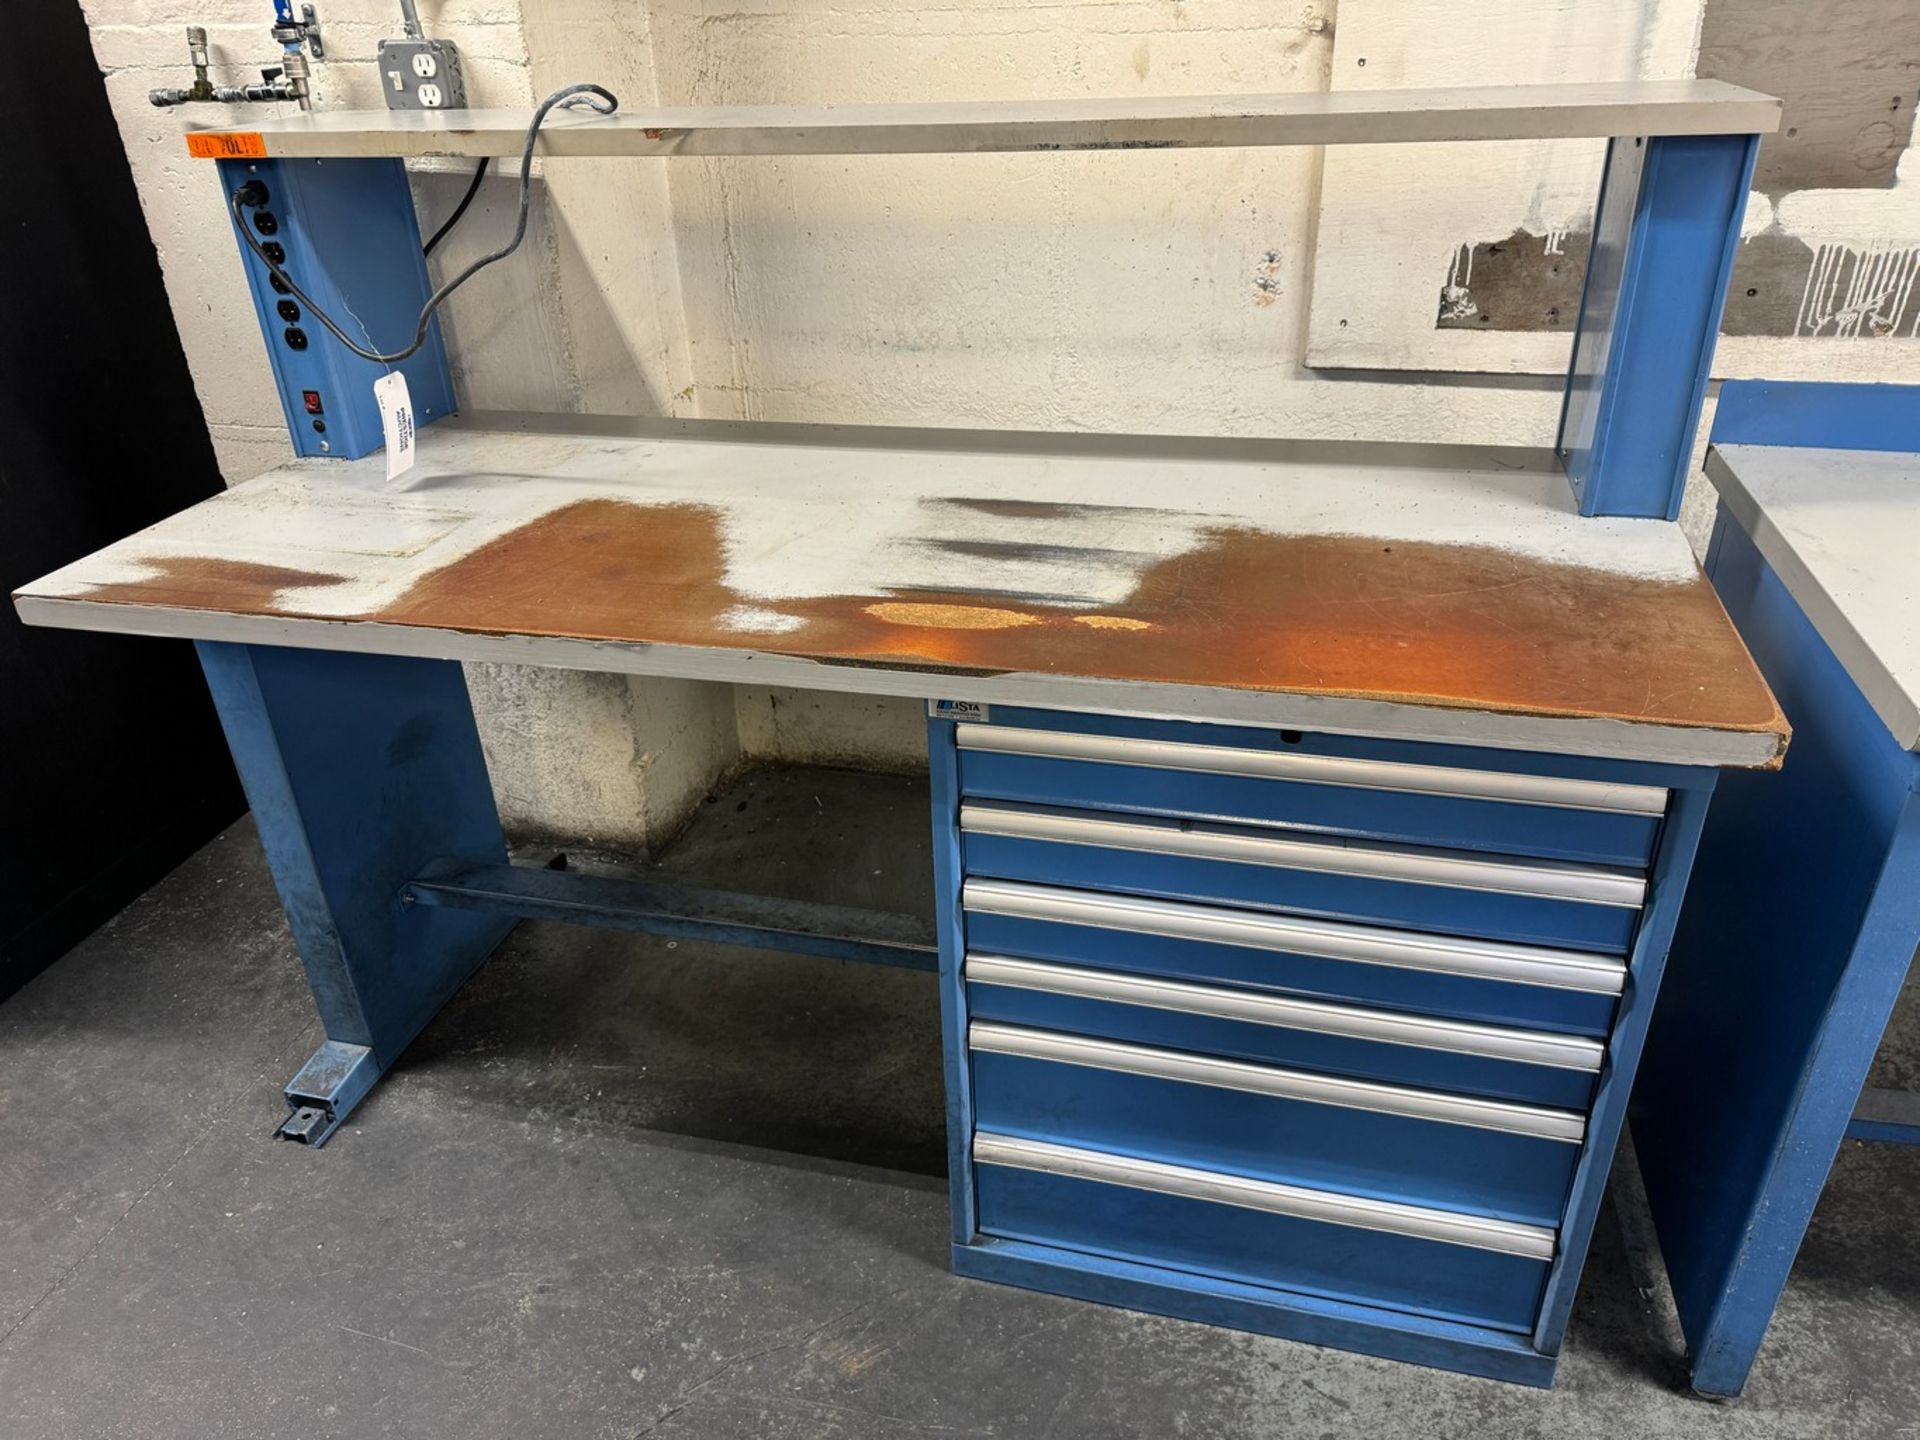 72" x 30" Lista 5-Drawer Steel Shop Work Desk, with Electrical Outlet, Upper Shelf